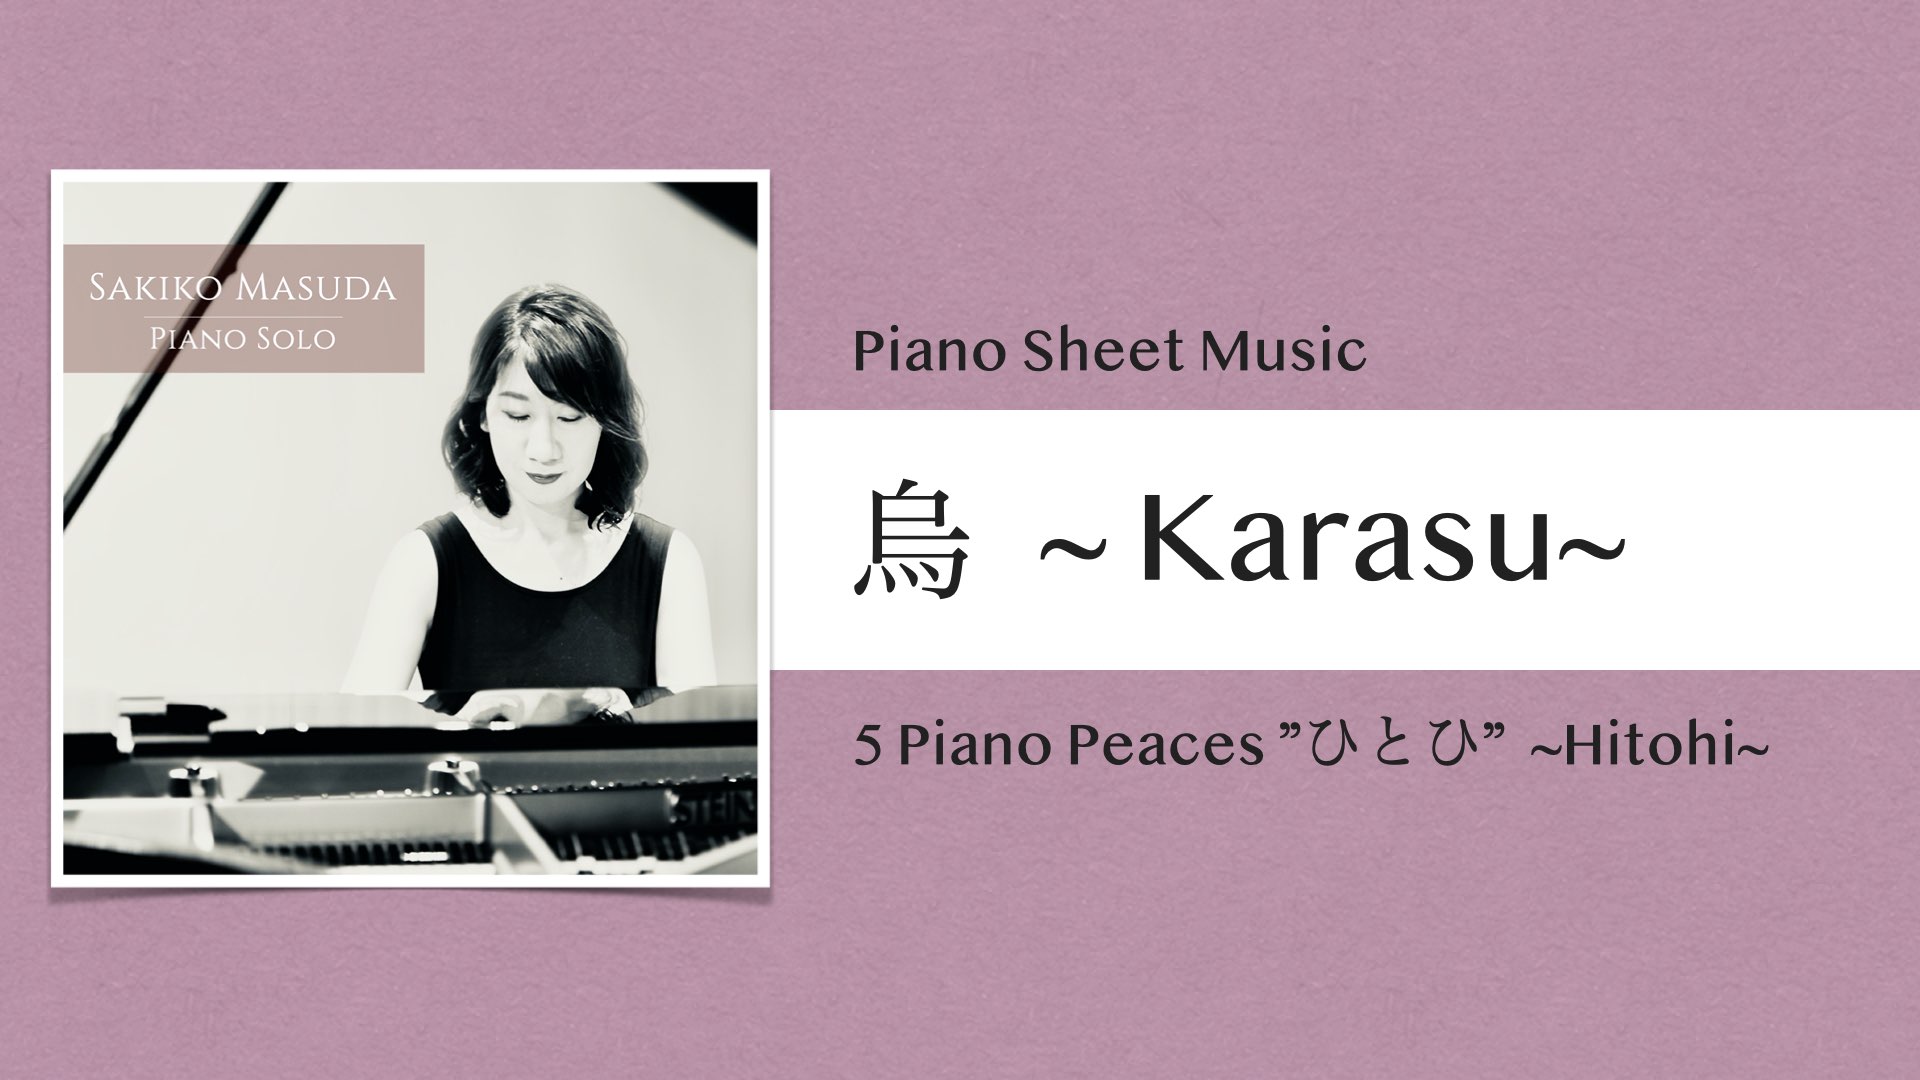 Karasu from 5 Piano Peaces "Hitohi"【Piano Sheet Music】